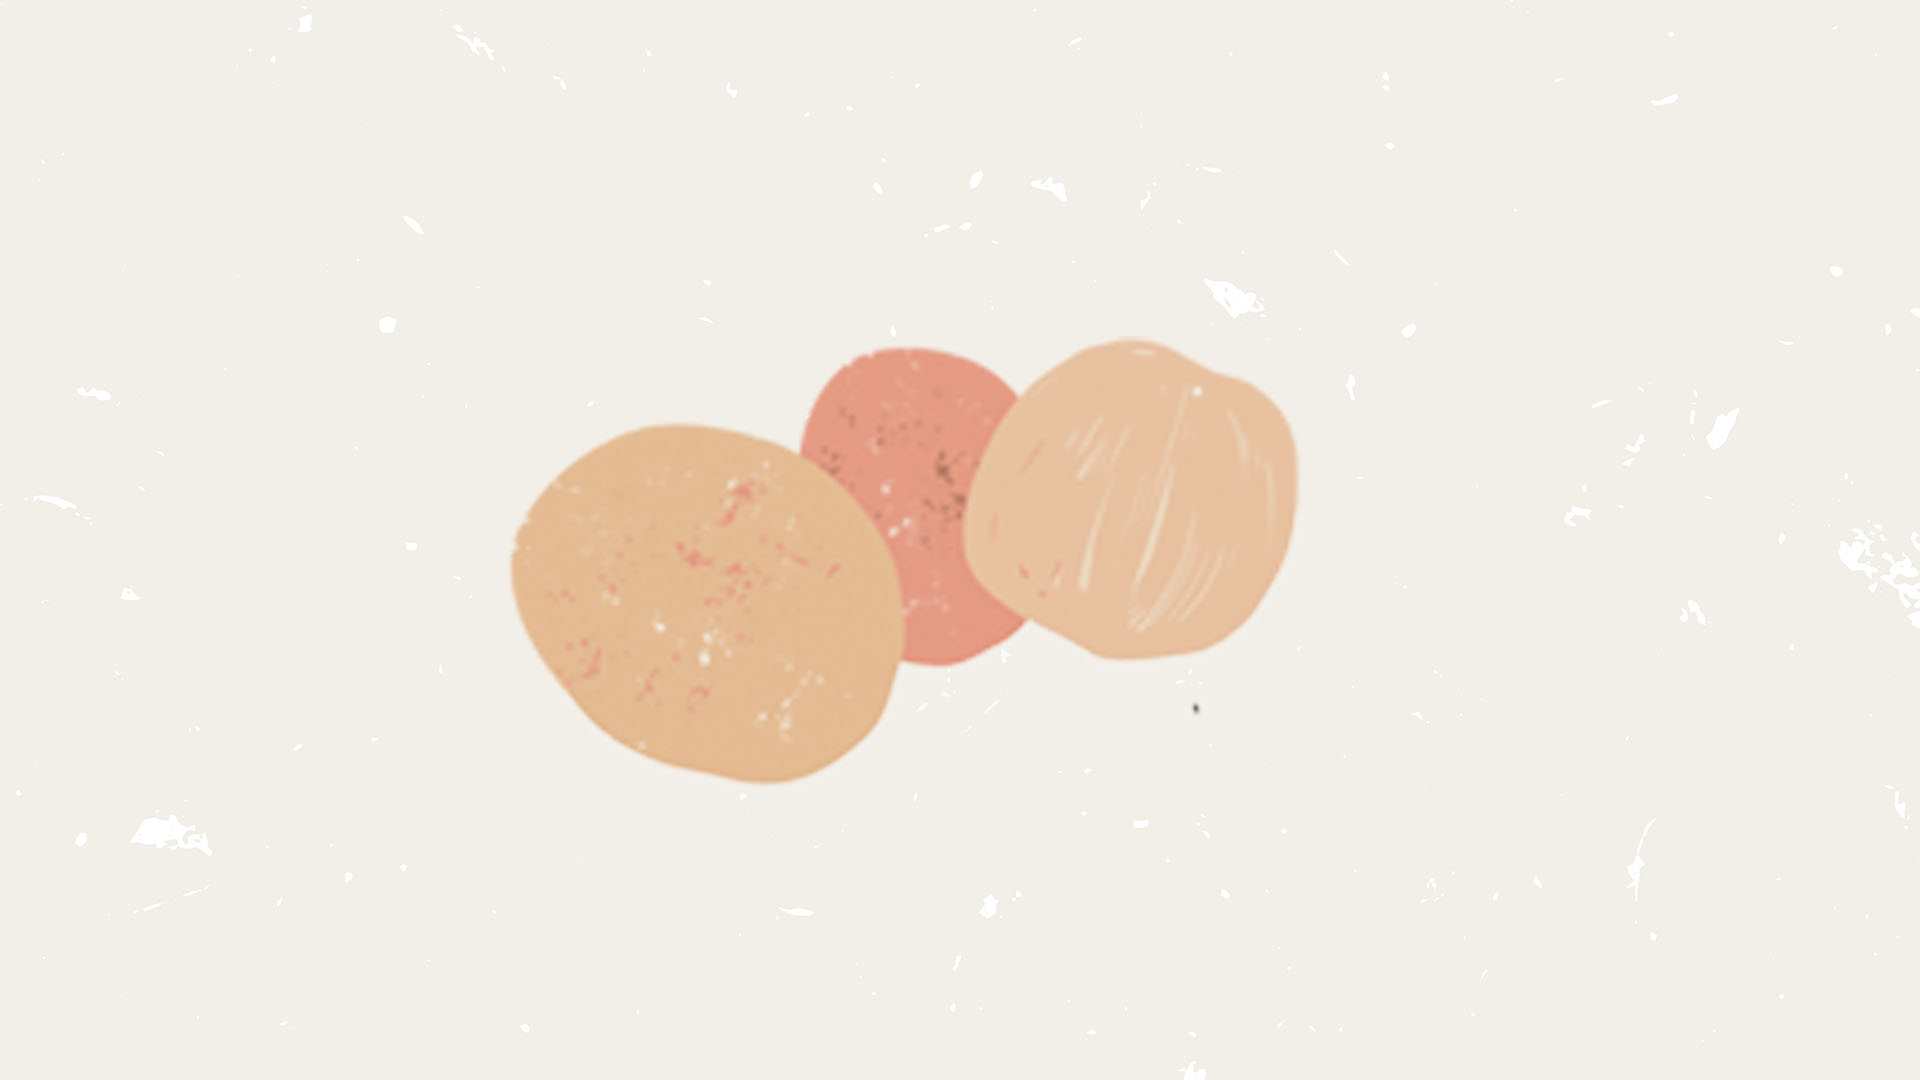 Potatoes illustration